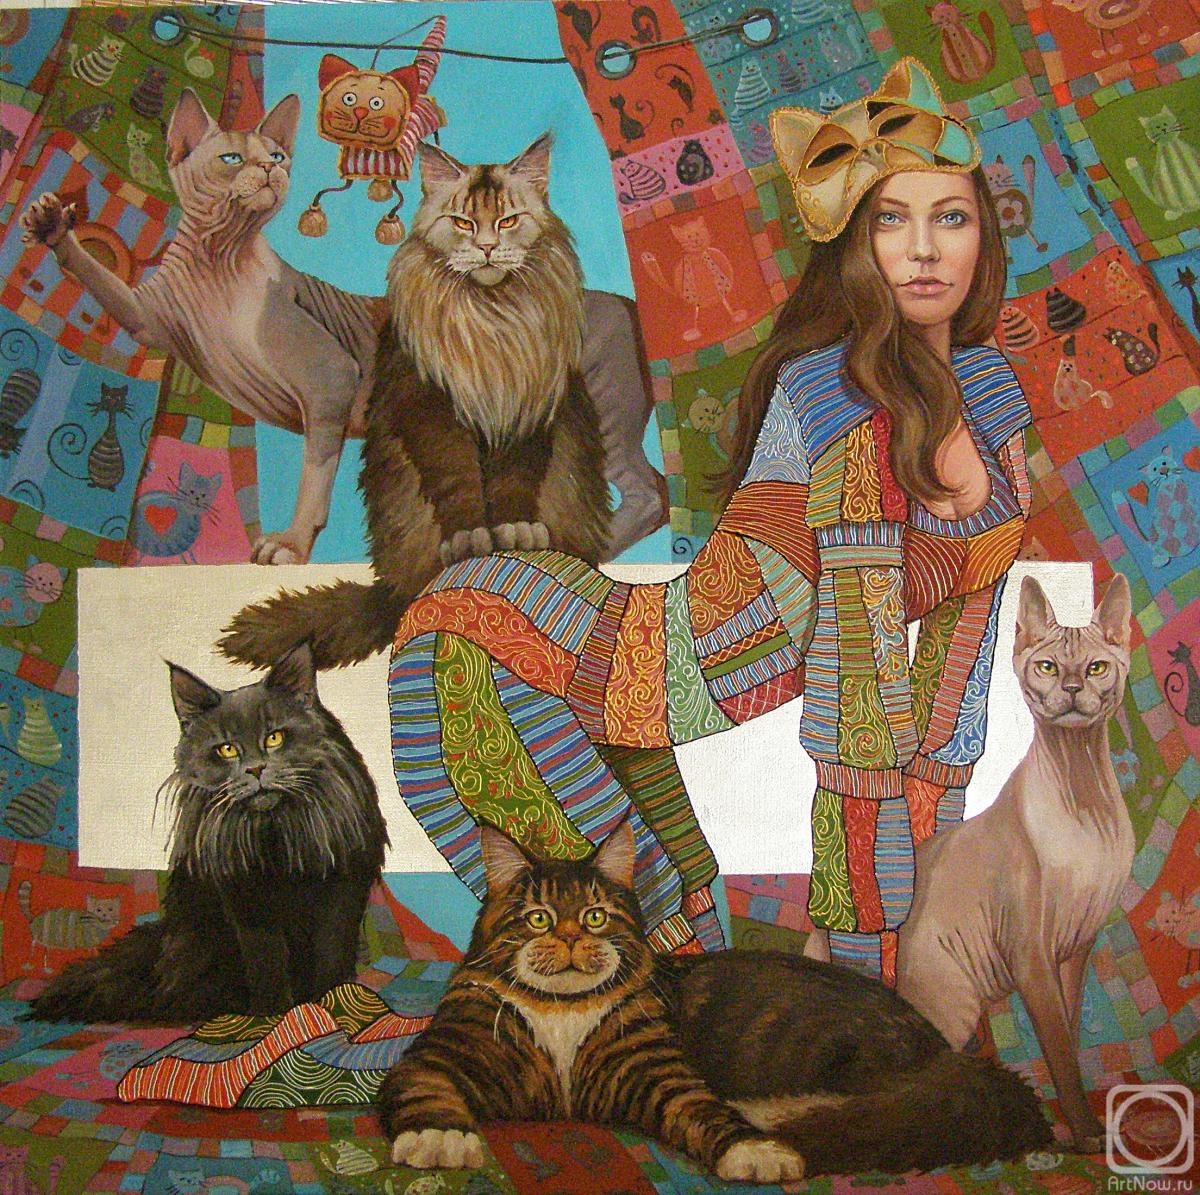 Mishchenko-Sapsay Svetlana. Cat manners or March mood